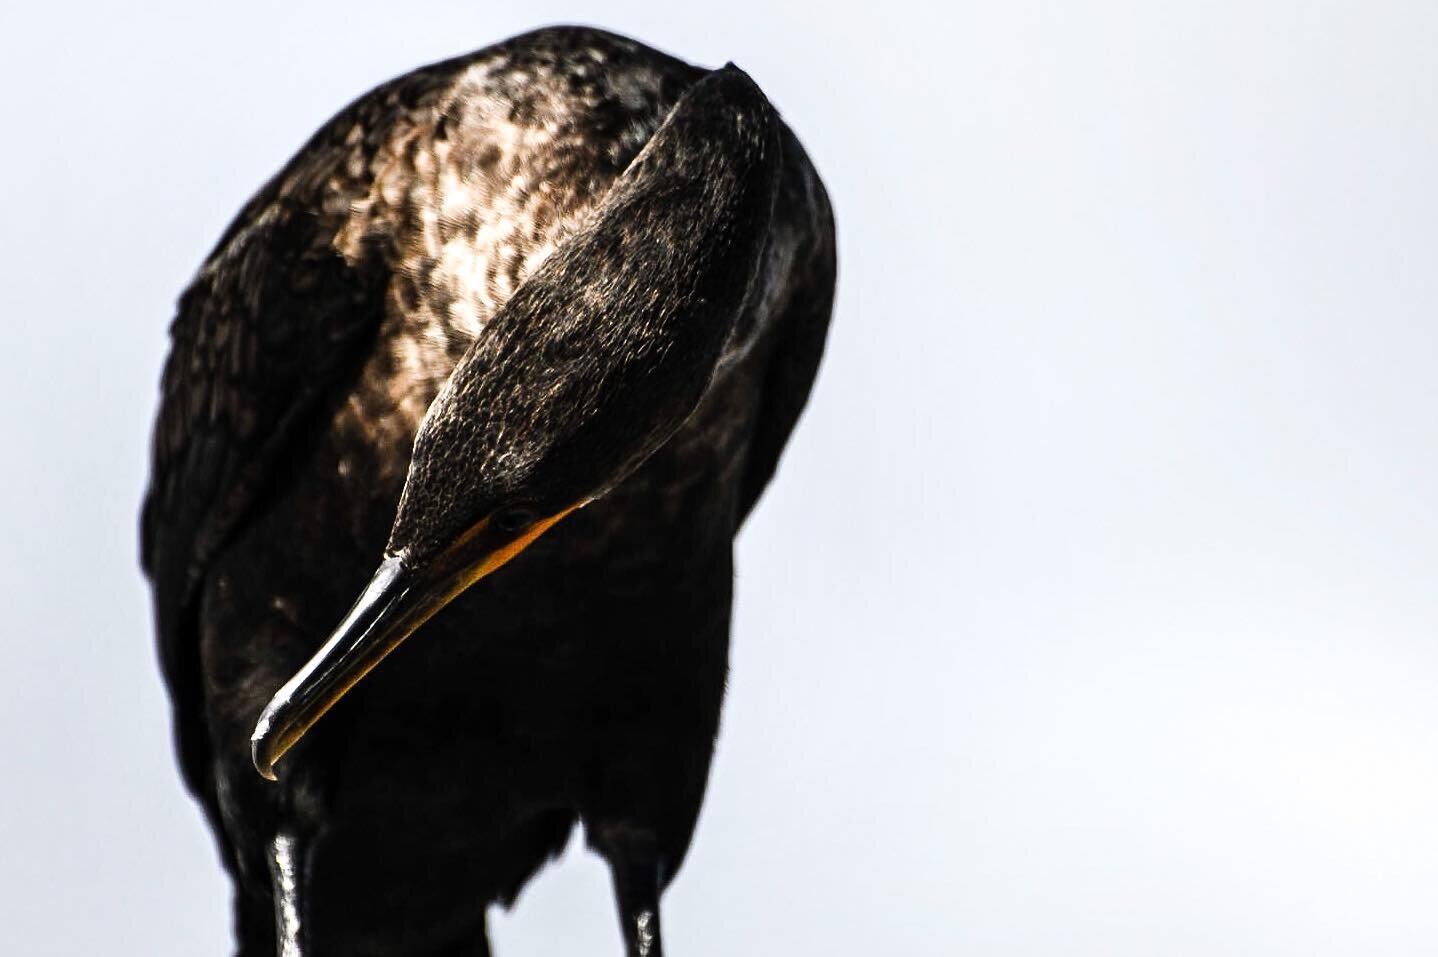 Spectral lookout
- - - - -
#cormorant #bird #birdphotography #wildlife #wildlifephotography #everglades #fineart #fineartphotography #art #artist #artistsoninstagram #nikon #nikonphotography #nikonusa #instagood #photooftheday
- - - - -
1/2000 | f5.6